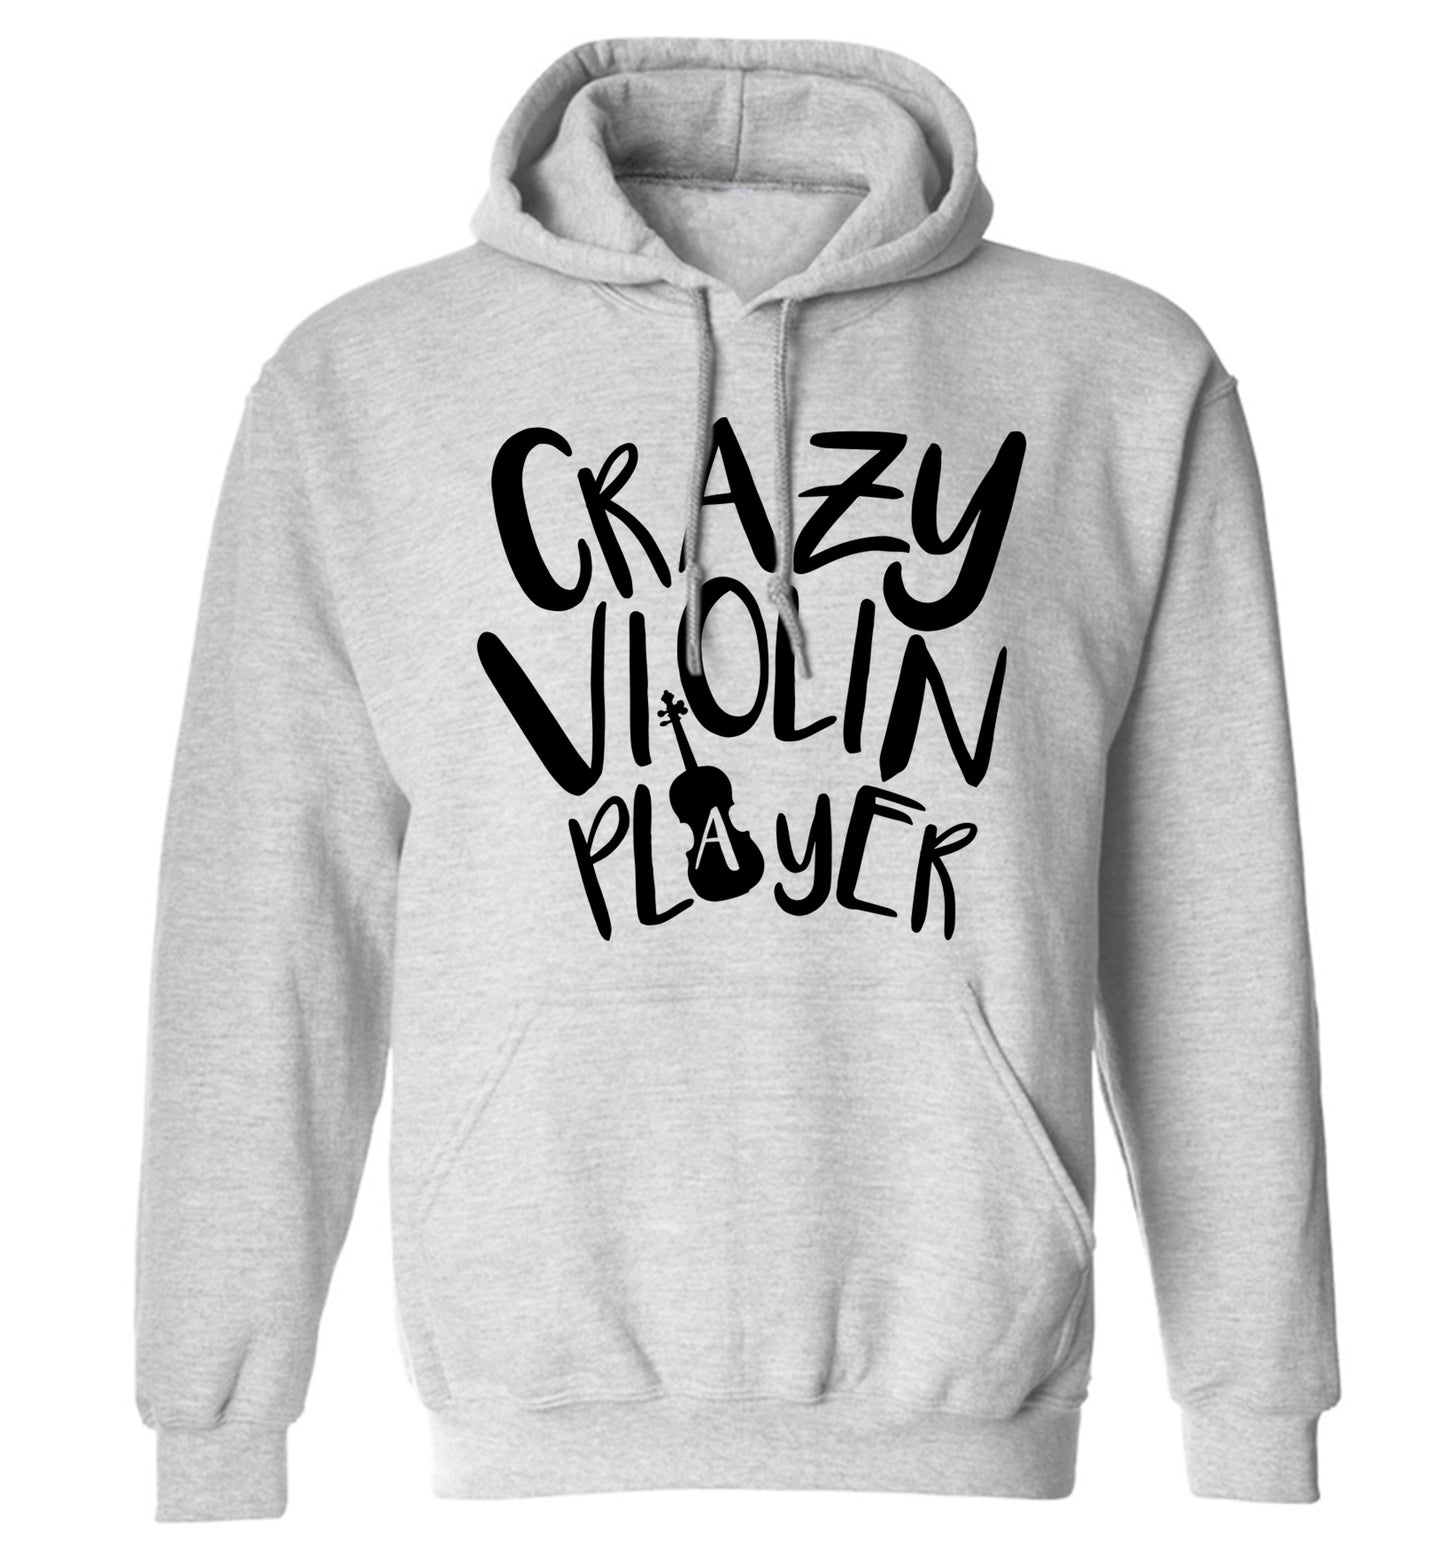 Crazy Violin Player adults unisex grey hoodie 2XL